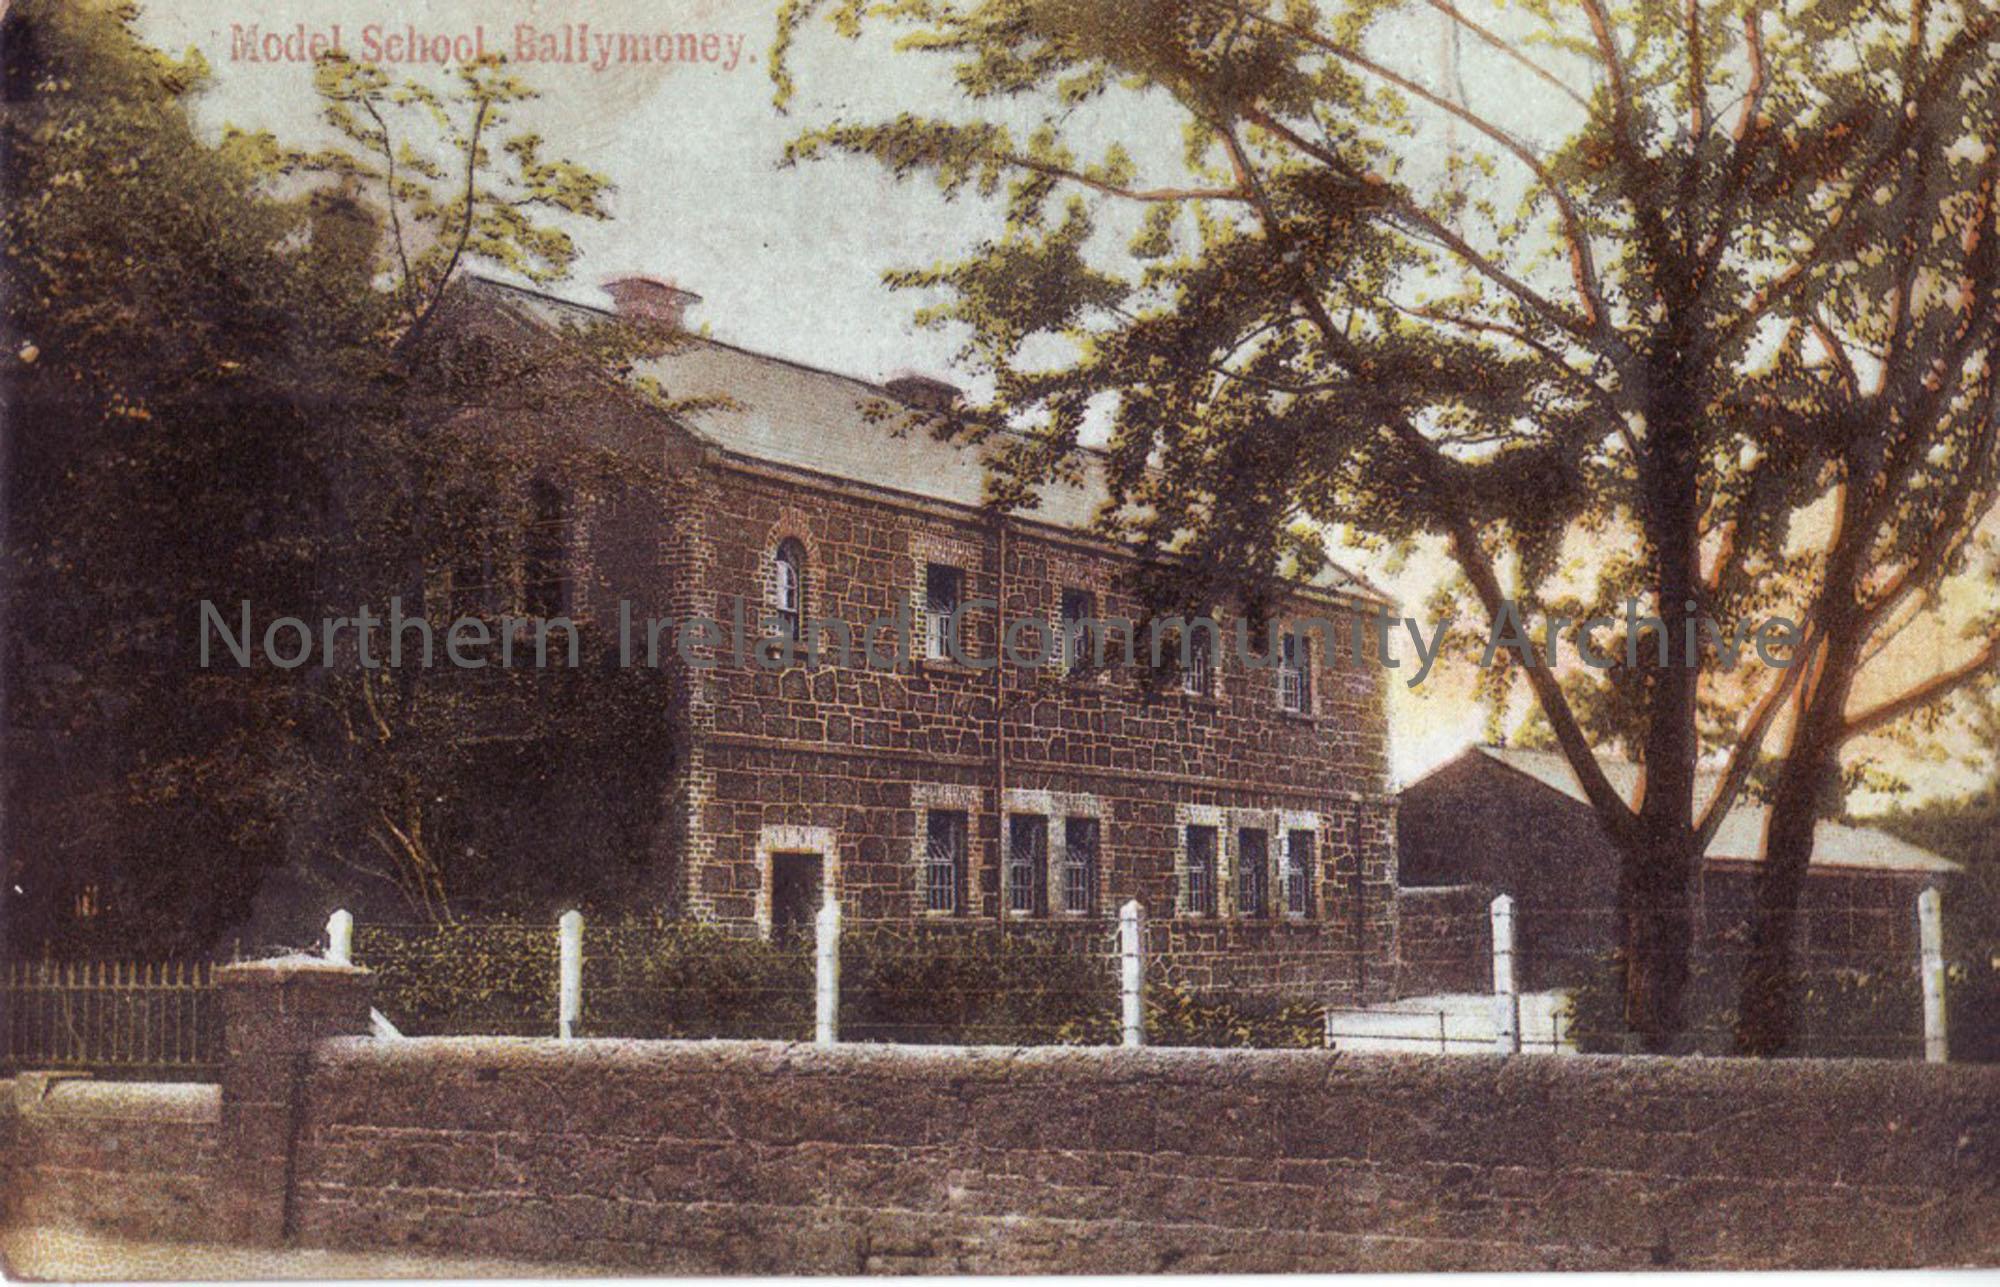 Coloured photograph of Model School, Ballymoney